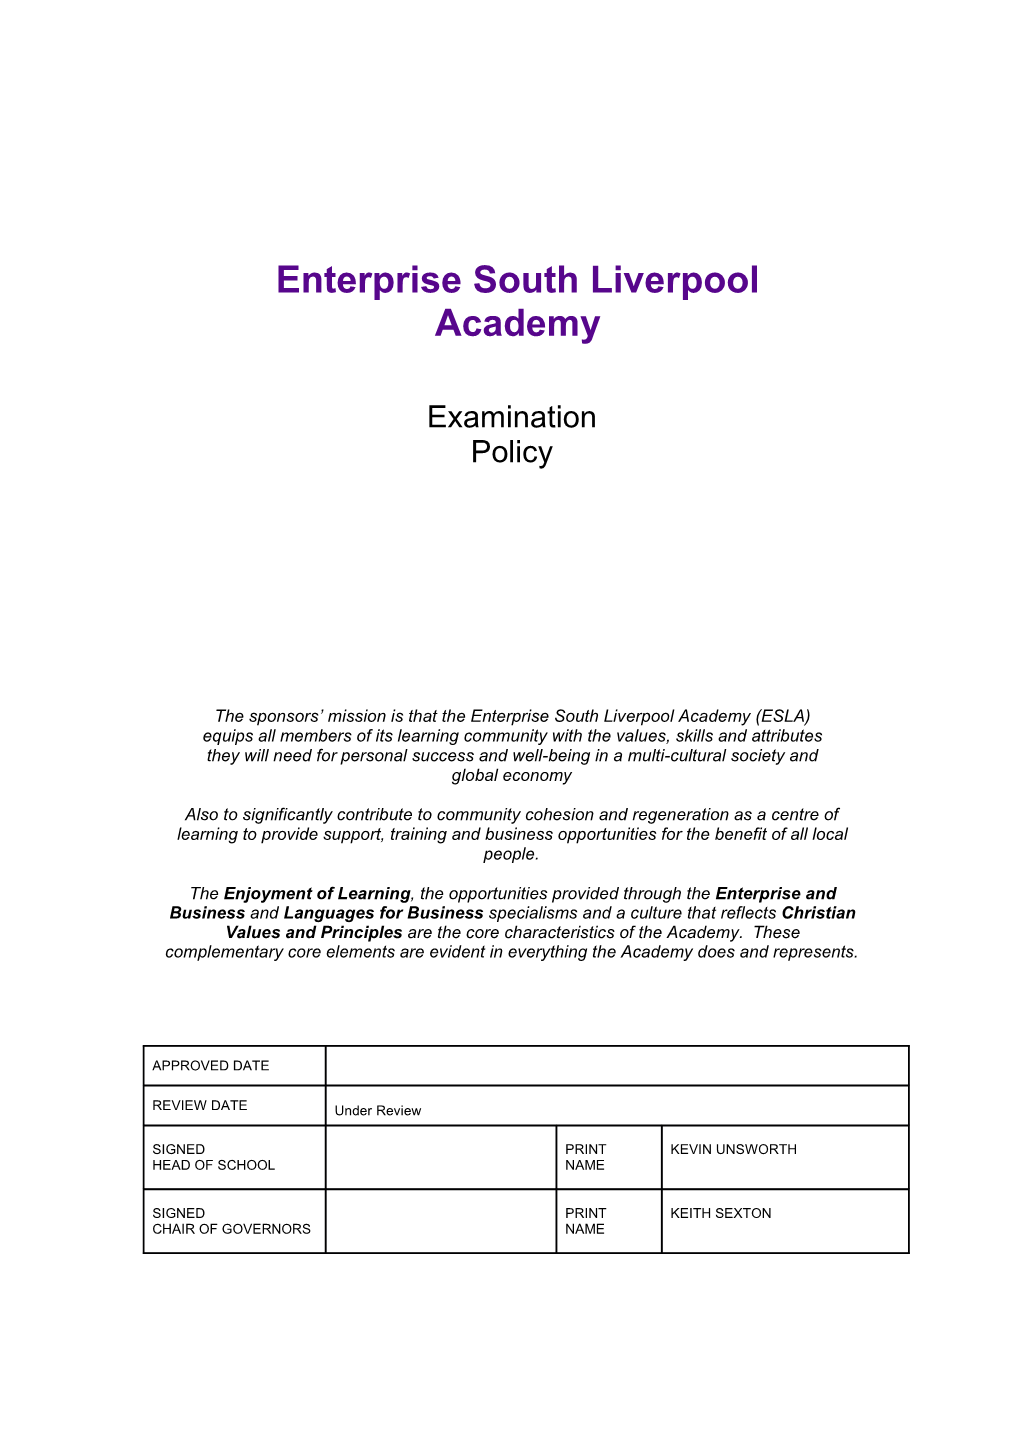 Enterprise South Liverpool Academy